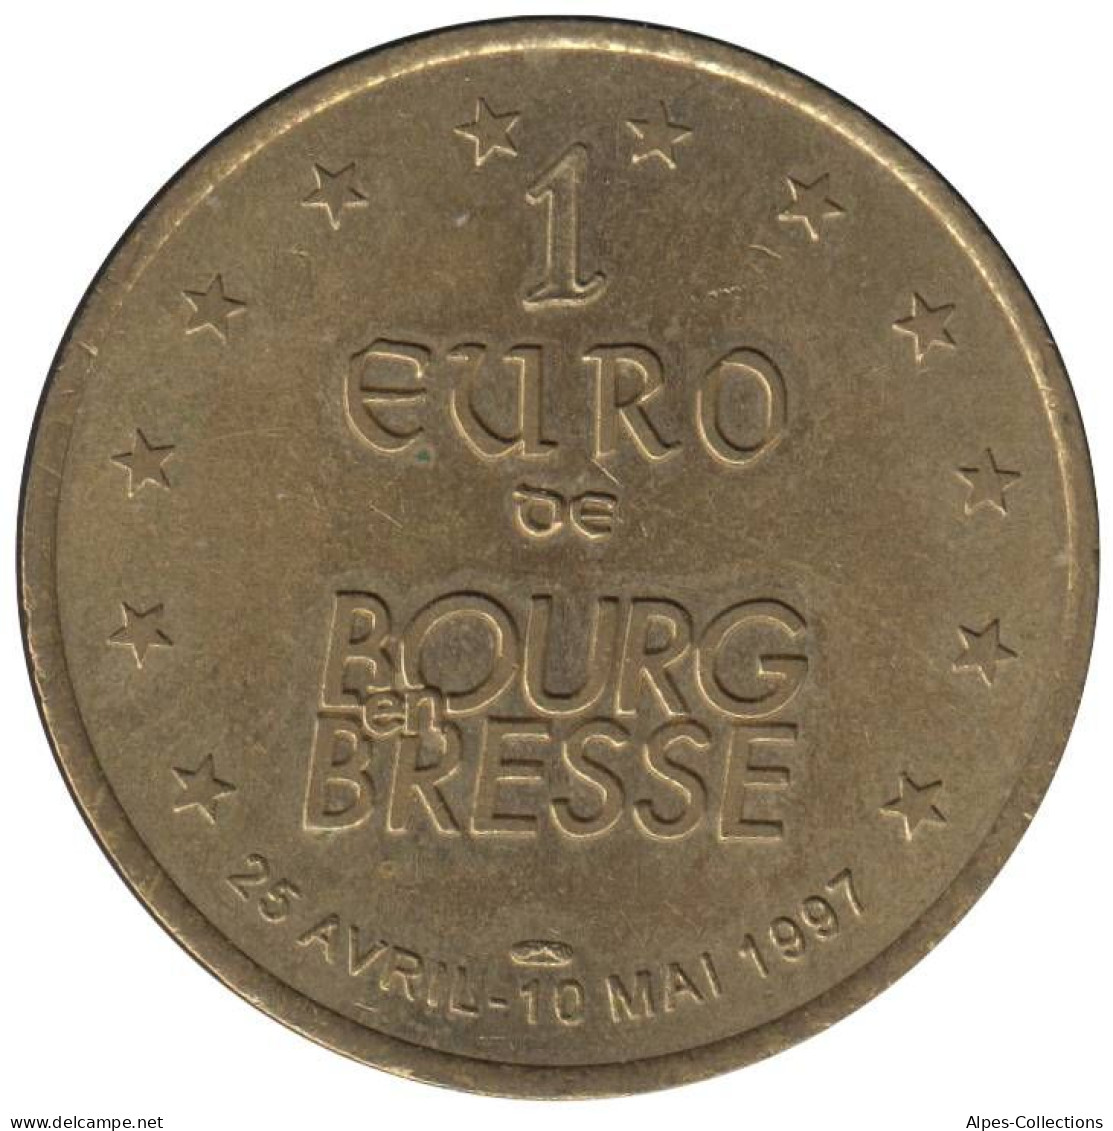 BOURG EN BRESSE - EU0010.6 - 1 EURO DES VILLES - Réf: T266 - 1997 - Euro Der Städte